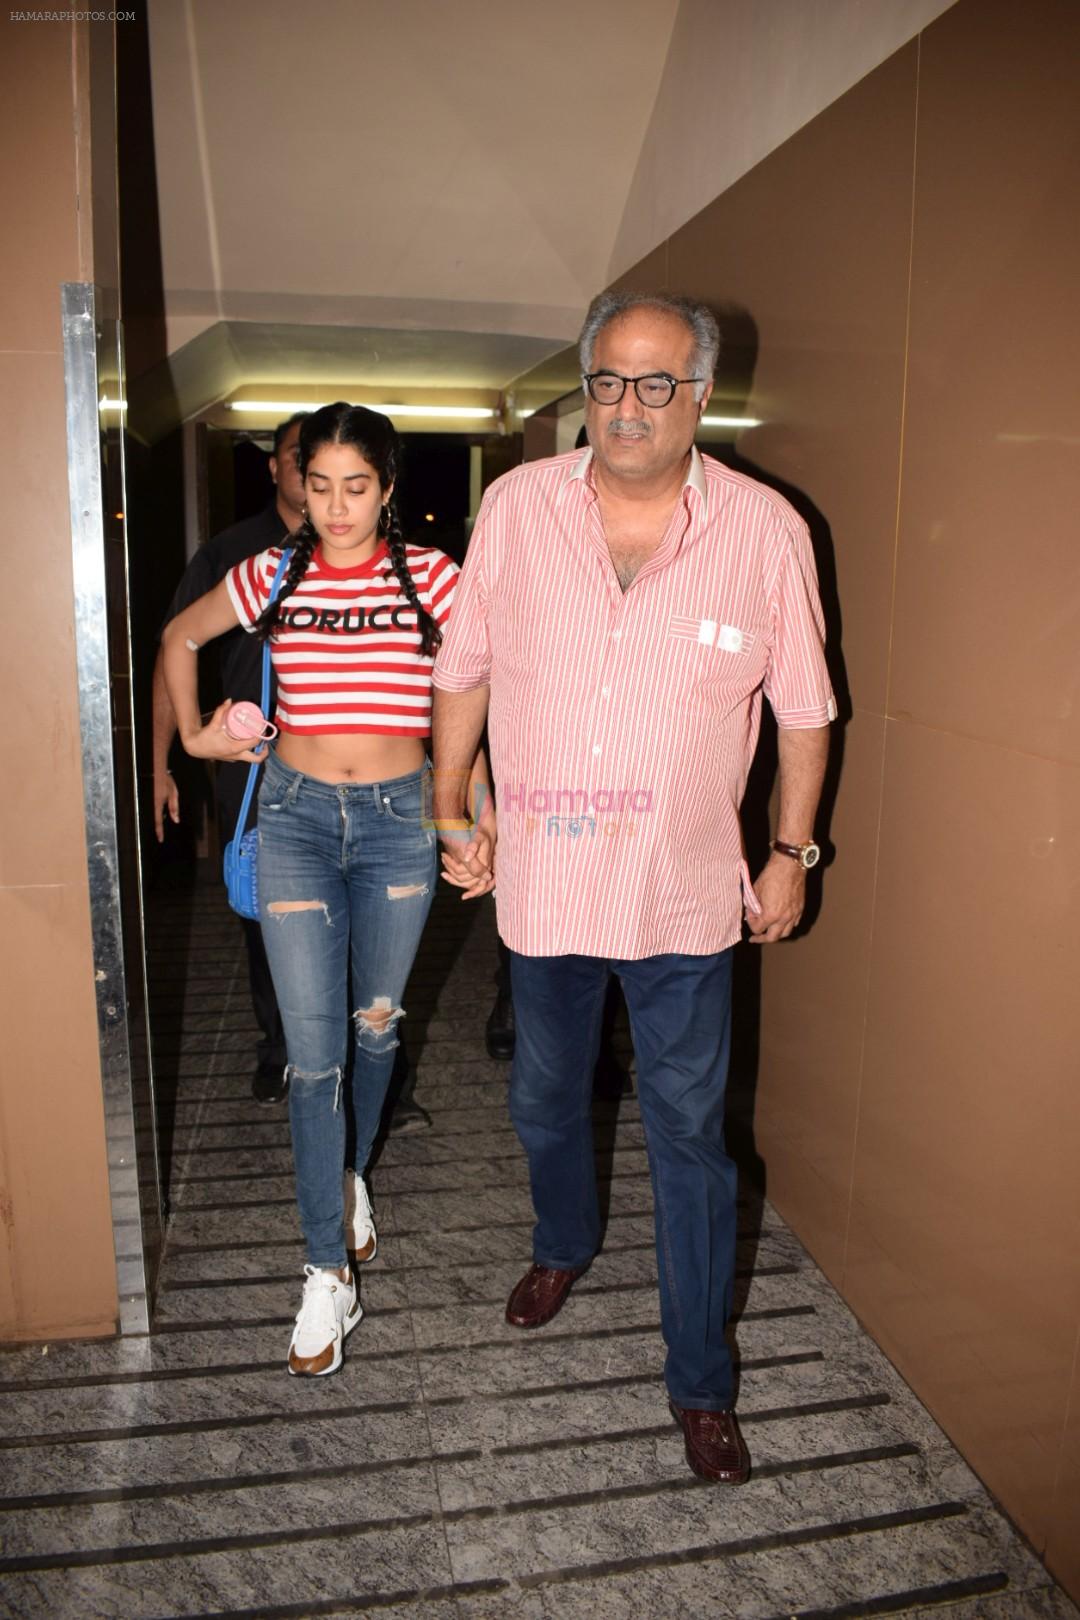 Janhvi Kapoor, Boney Kapoor spotted at pvr juhu in mumbai on 20th May 2018